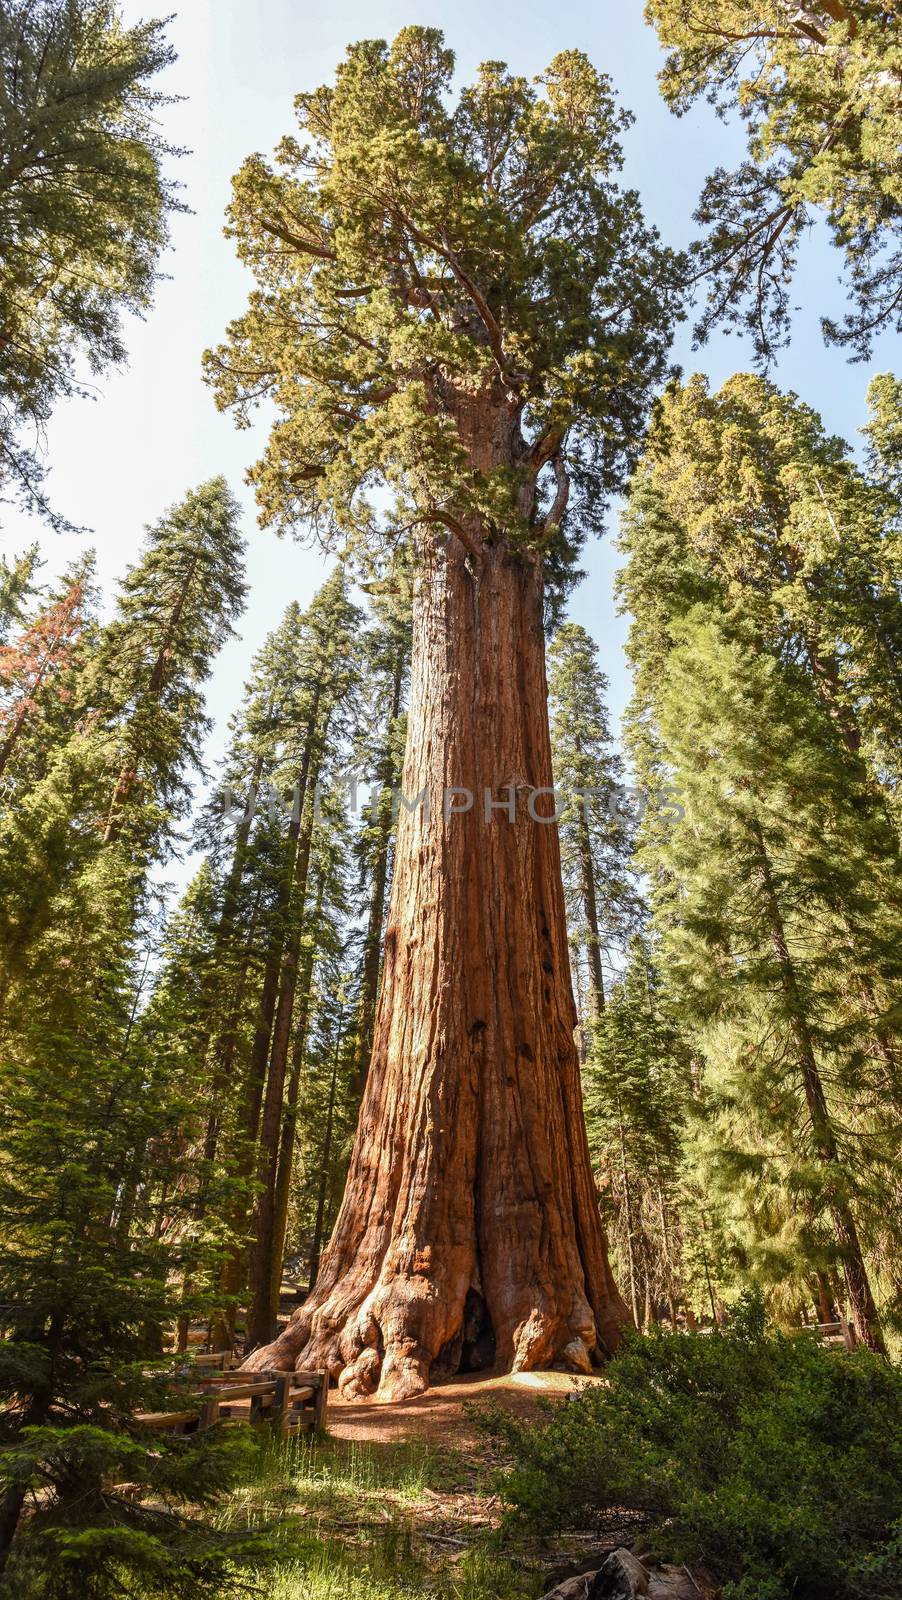 General Sherman Tree in Sequoia National Park, California by Njean